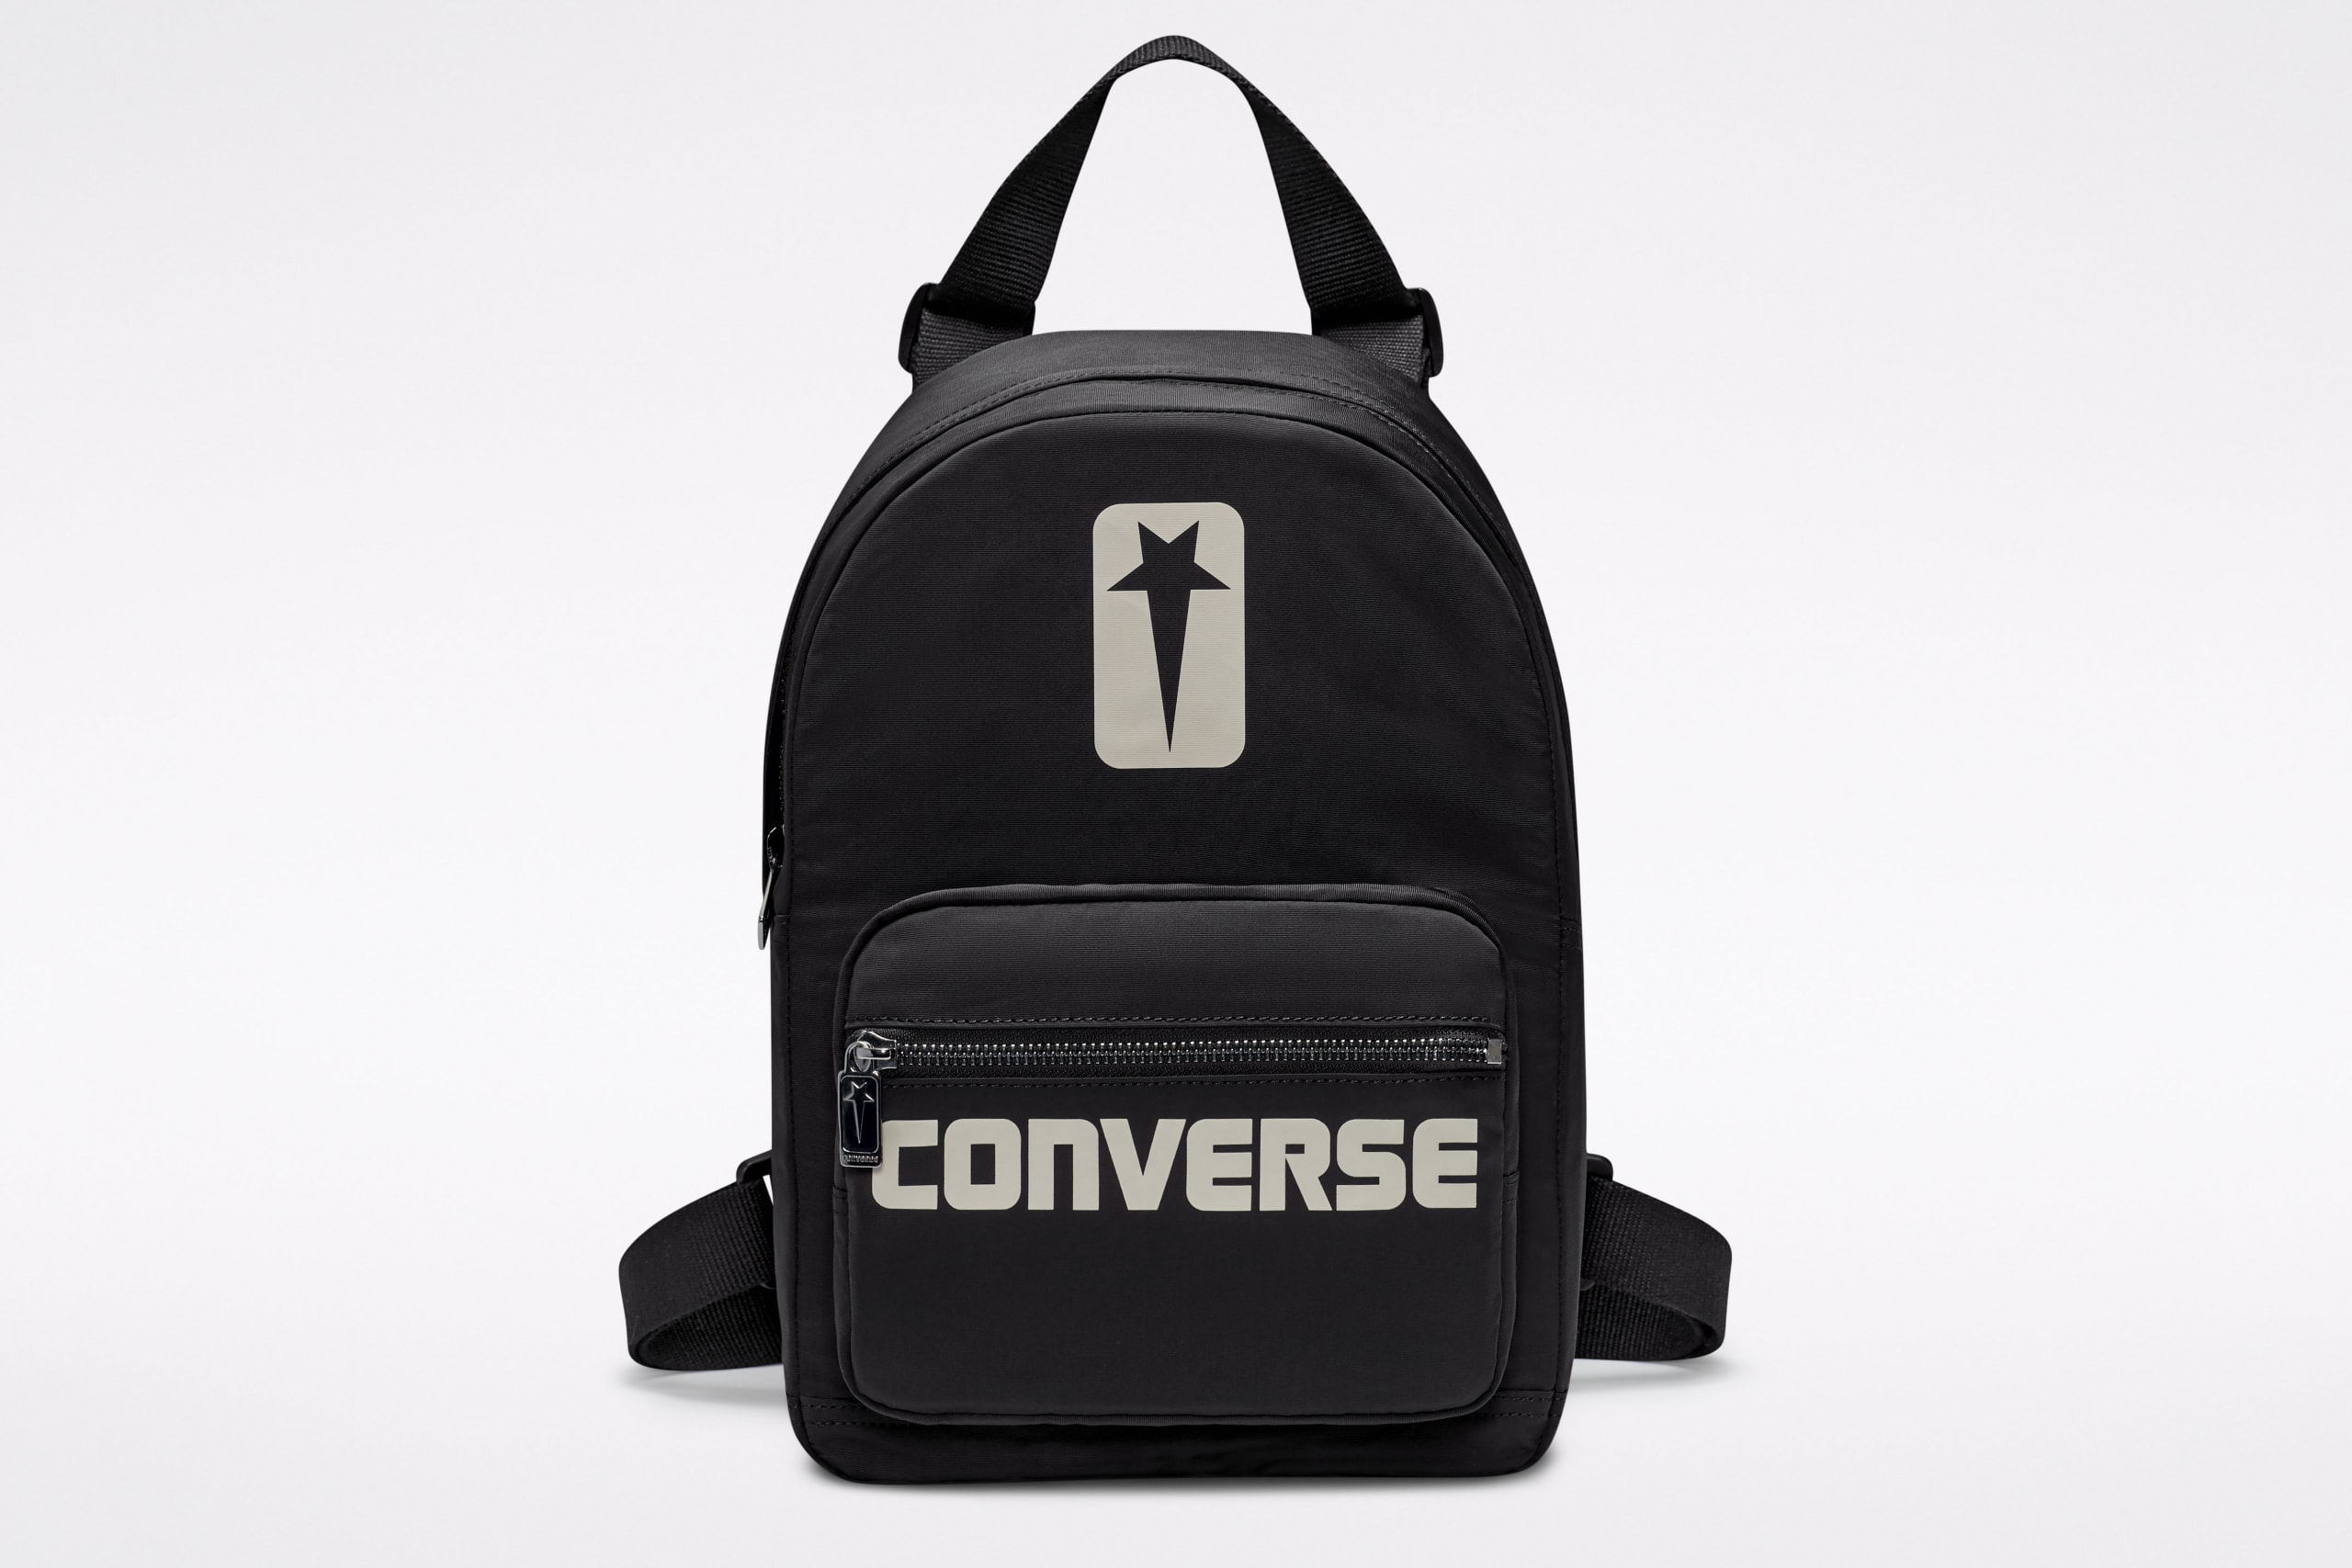 Converse 再度攜手 Rick Owens DRKSHDW 推出最新 DRKSTAR 聯乘系列